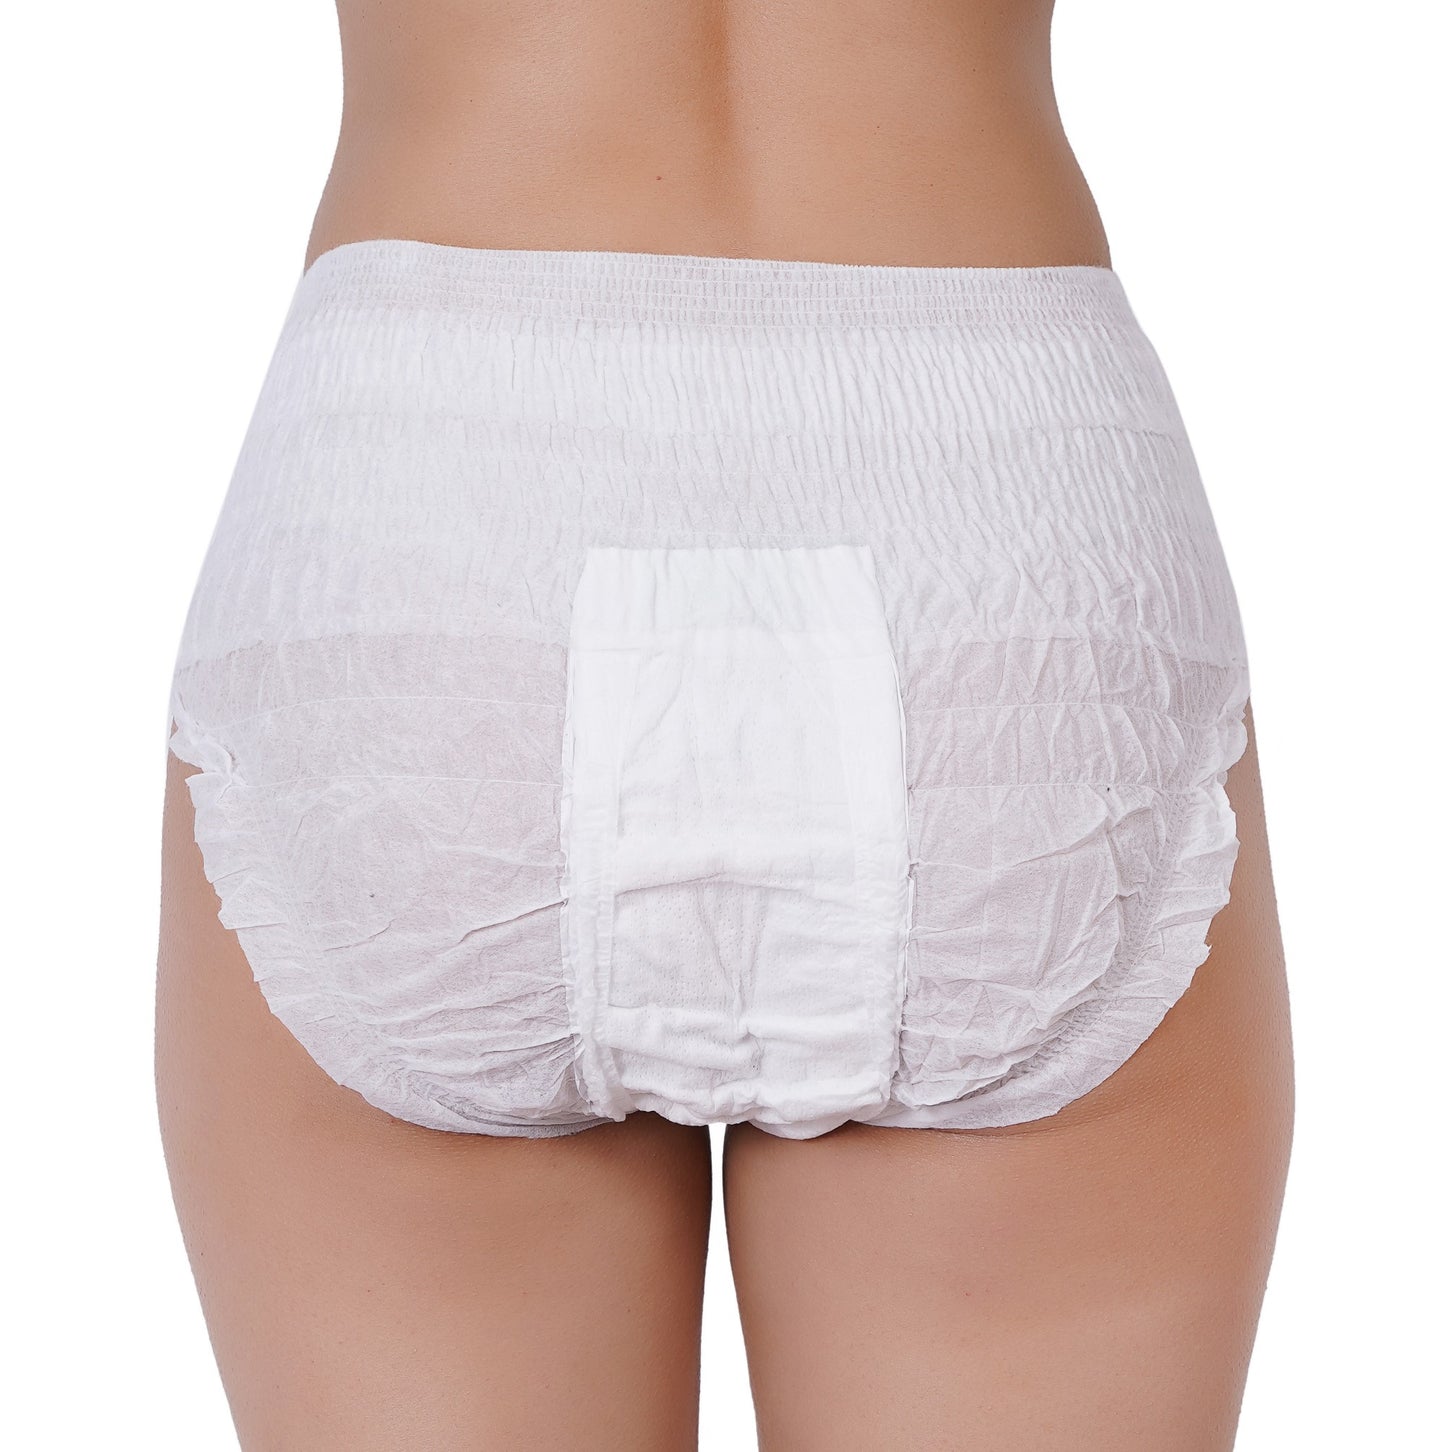 Fabpad Reusable Period Panty *Detailed Honest Review* #fabpad #periodpanty  